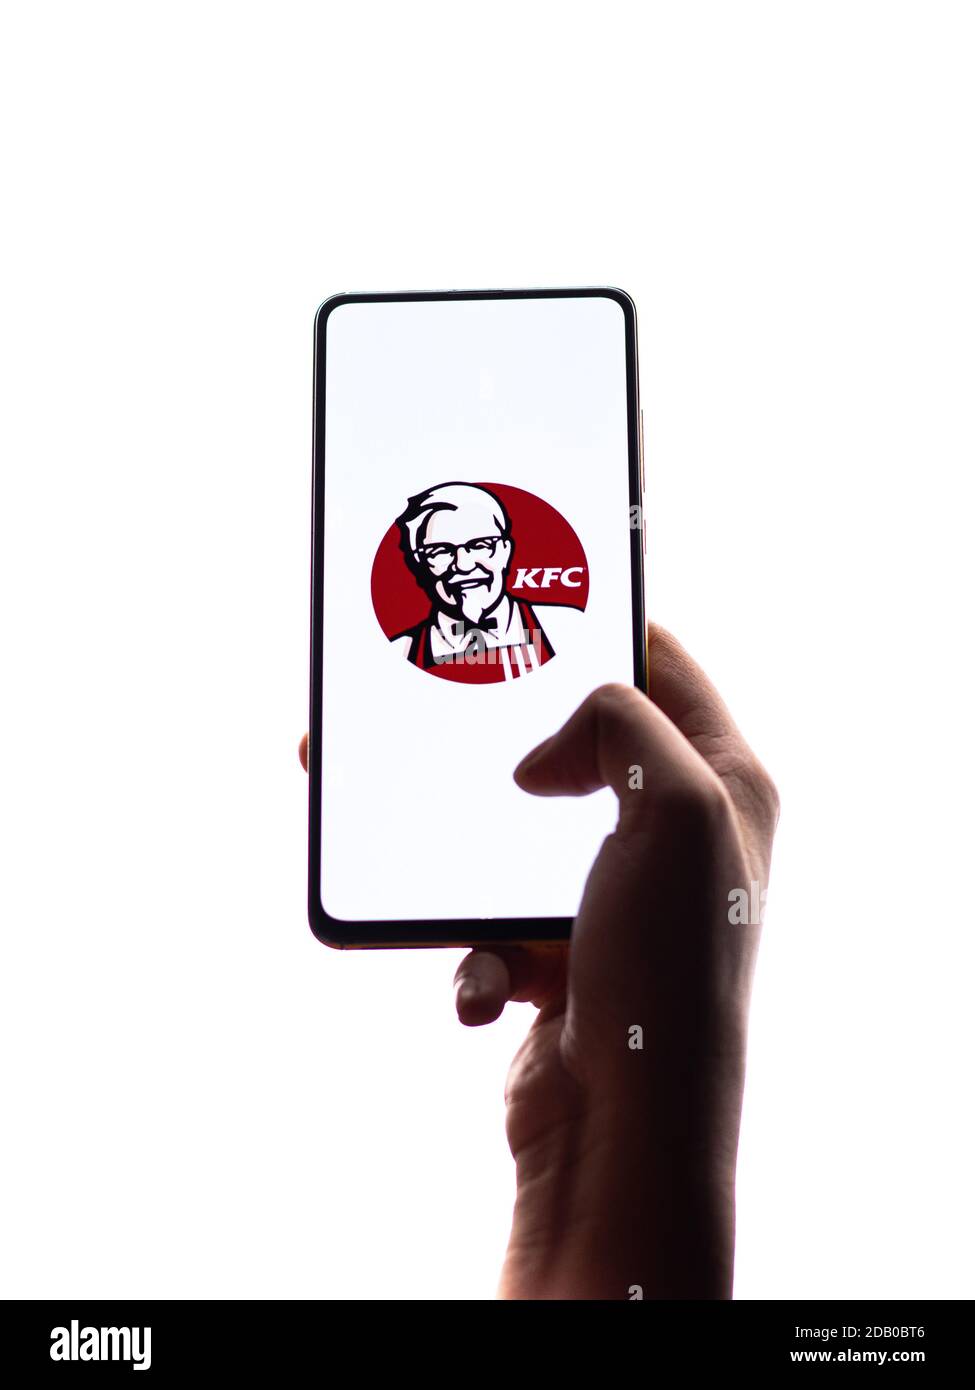 Assam, india - November 15, 2020 : KFC logo on phone screen stock image. Stock Photo